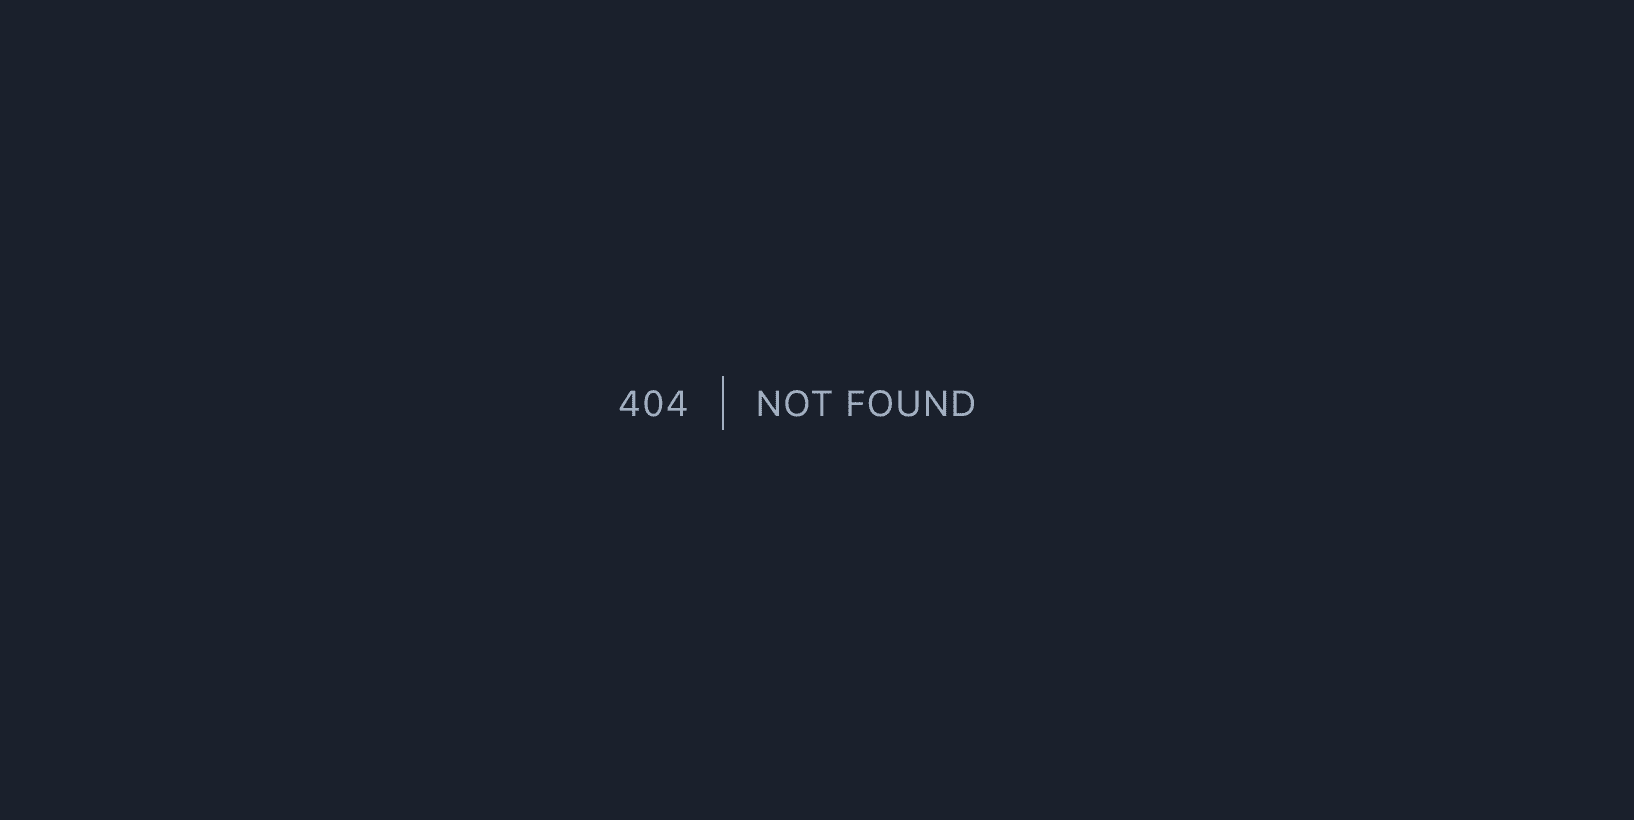 Laravel default 404 page